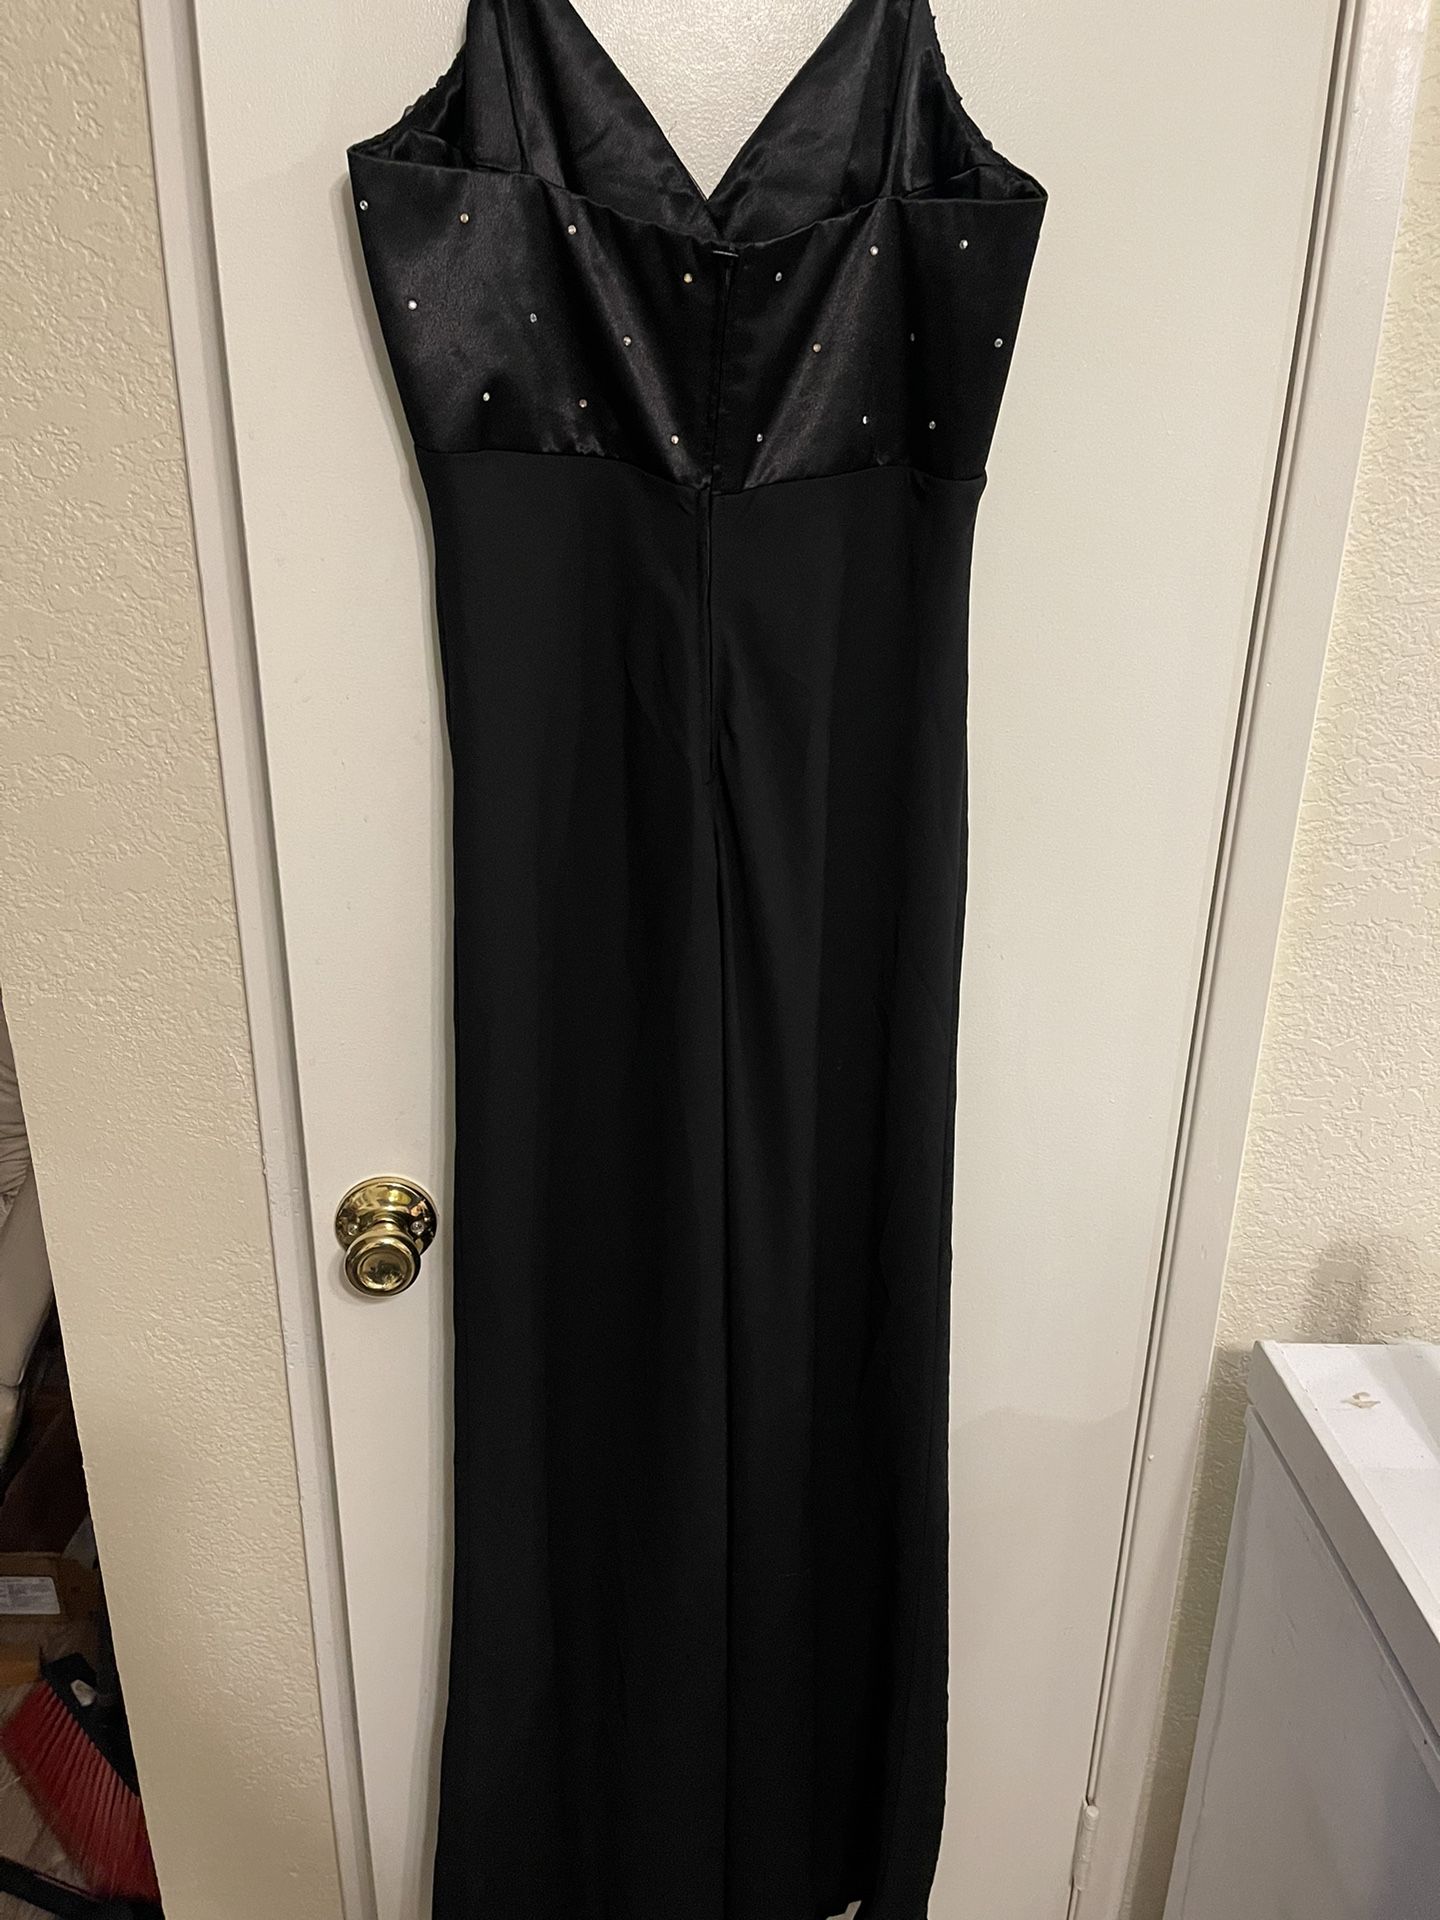 New Black Satin/ Chiffon Maxi Dress Size M 